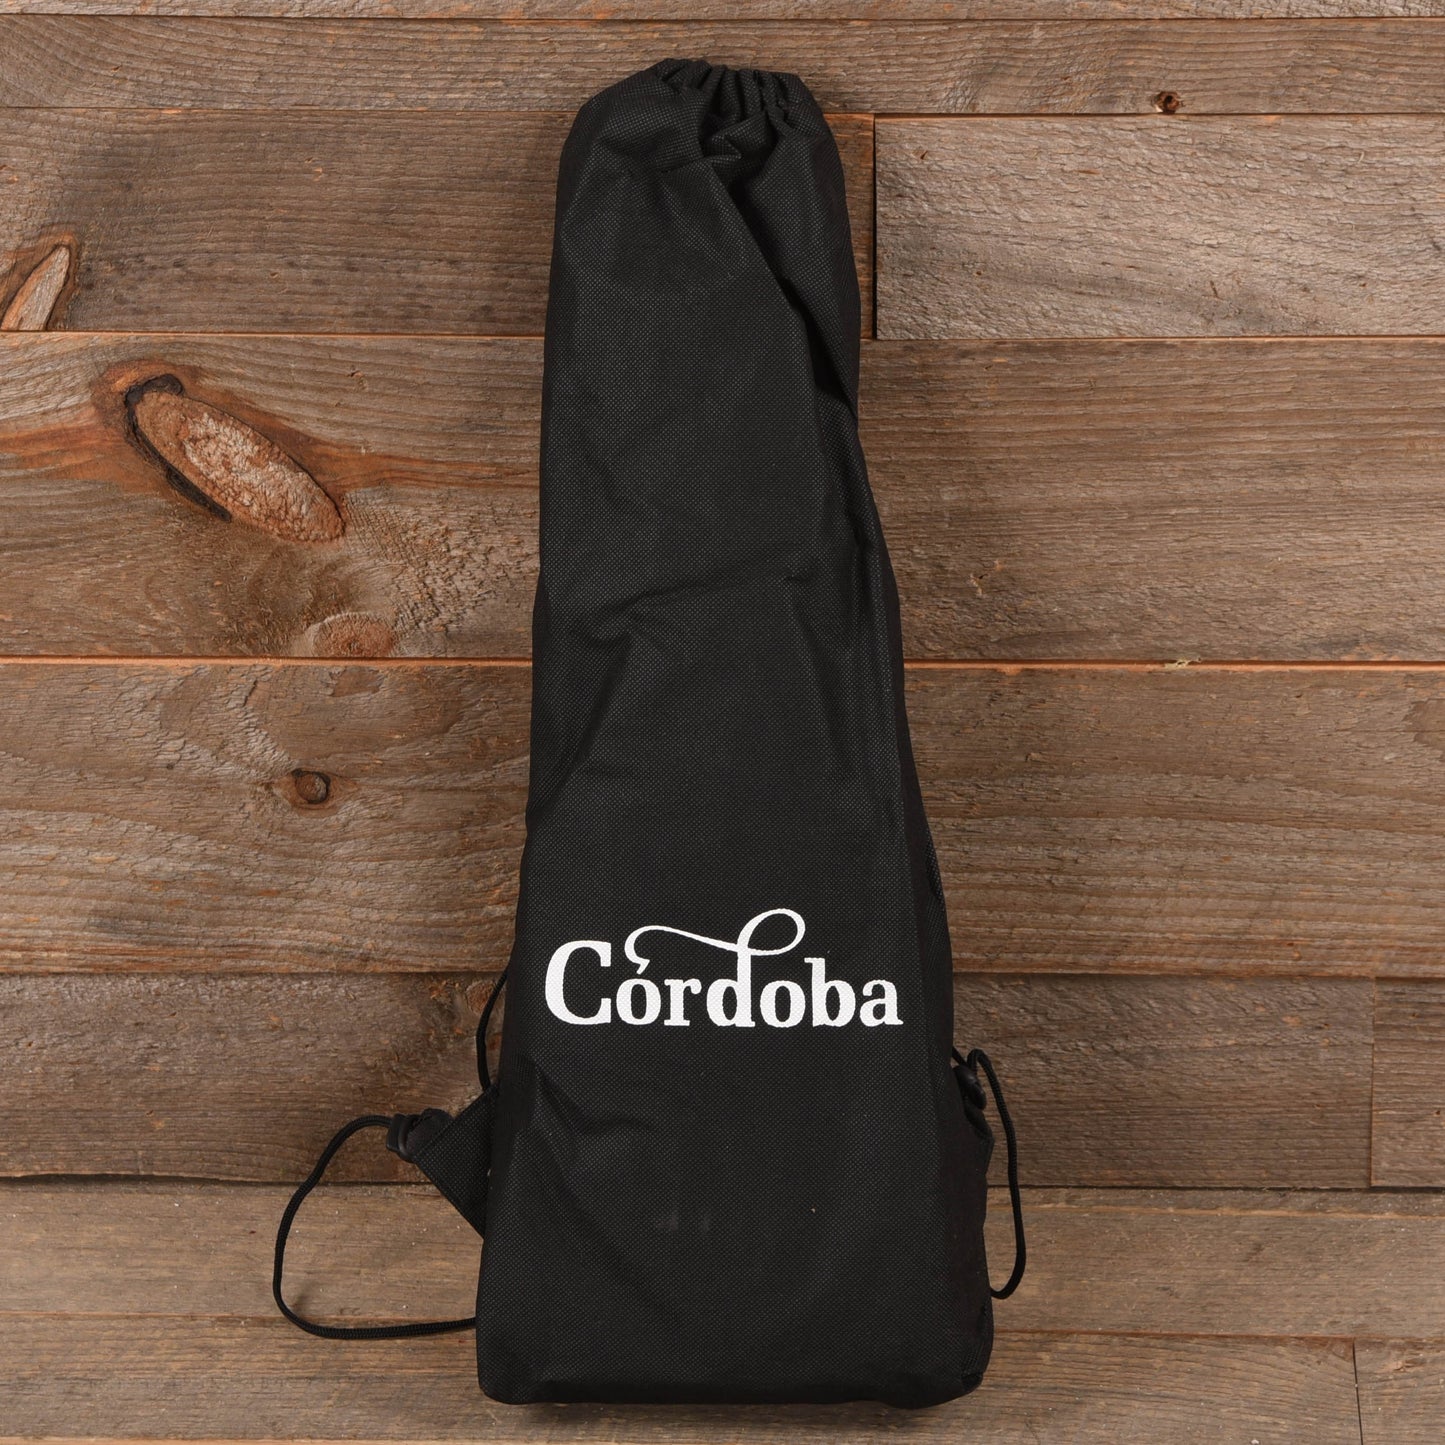 Cordoba Soprano Ukulele Mahogany Player Pack w/Travel Bag, Clip-On Tuner, Strings, and Chord Book